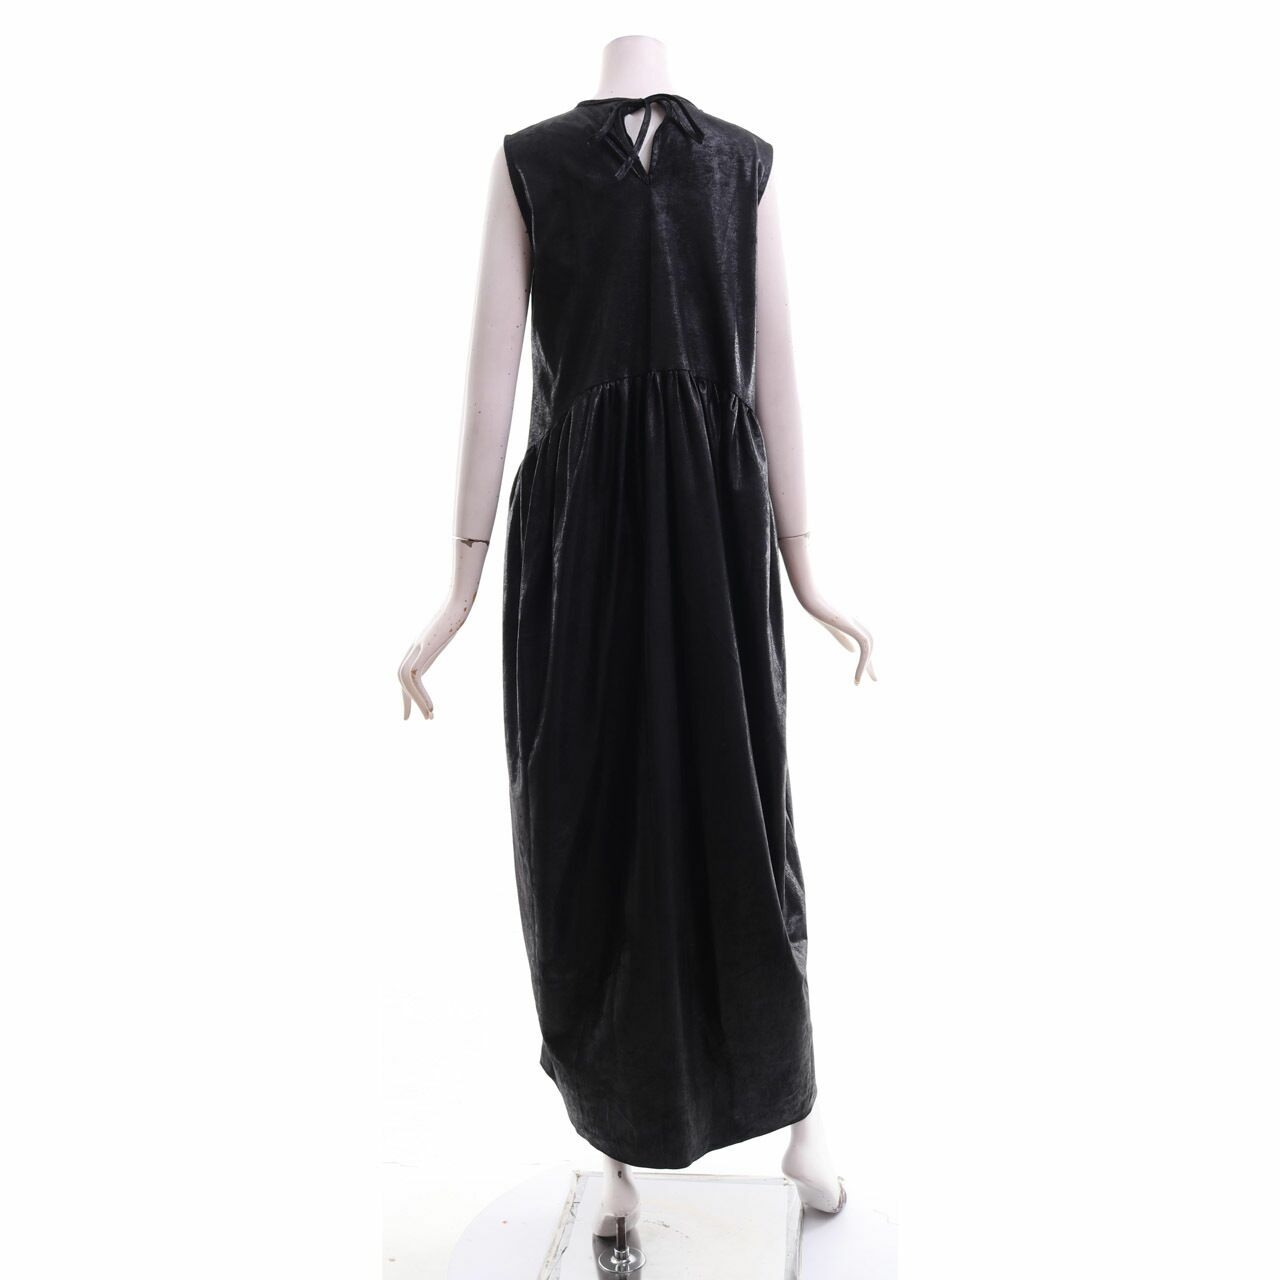 Nikicio White Label Black Glitter Long Dress